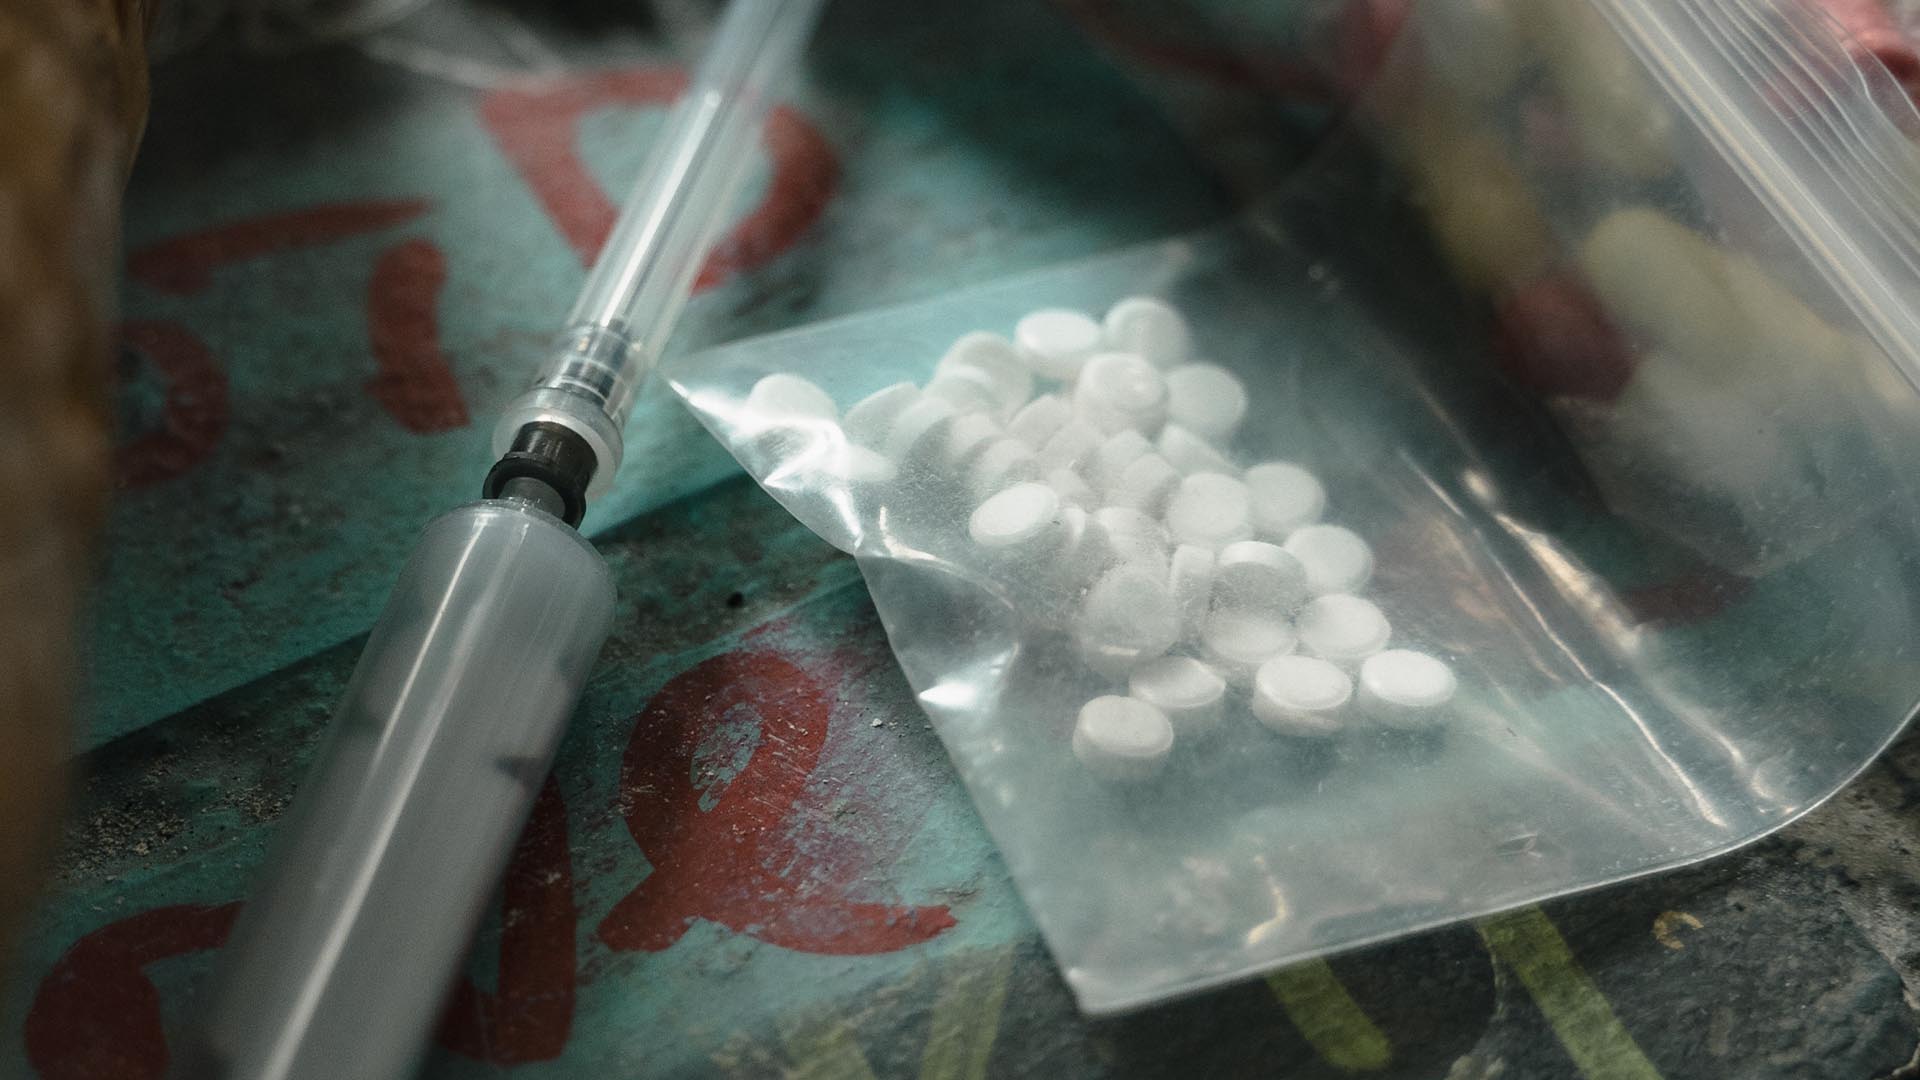 syringe and white pills